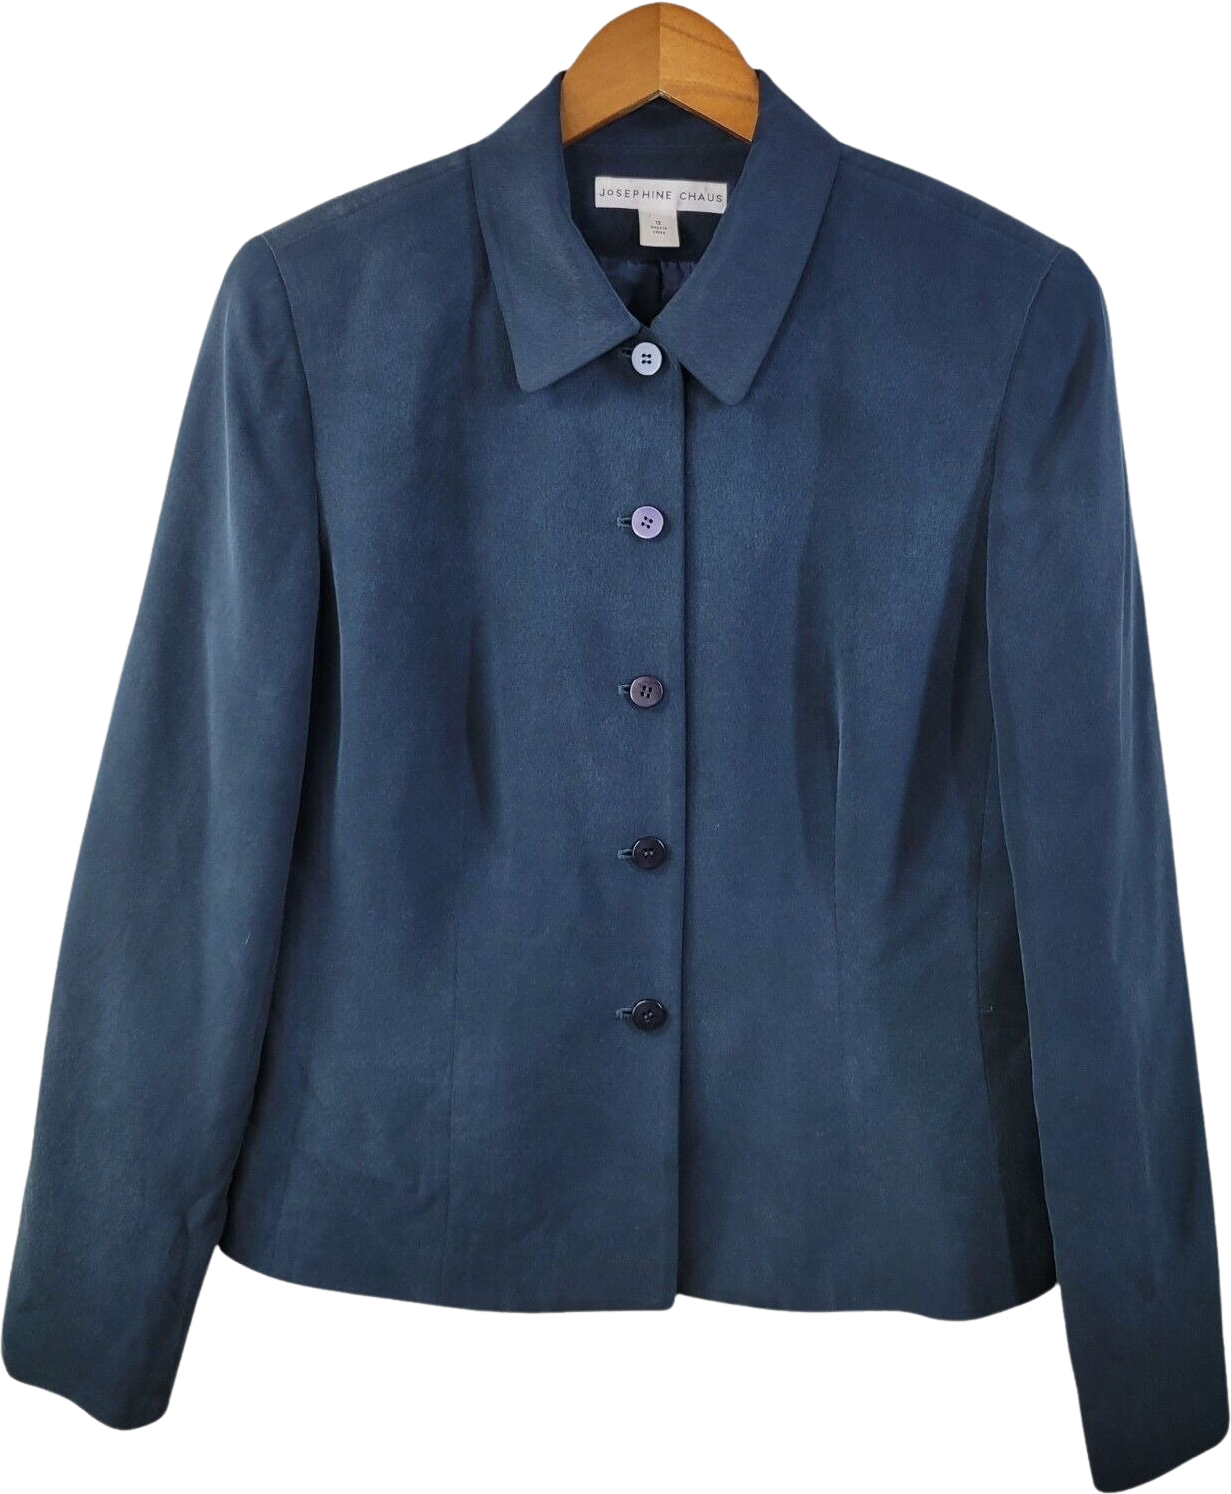 Josephine Chaus Black Blazer Jacket Size 12 